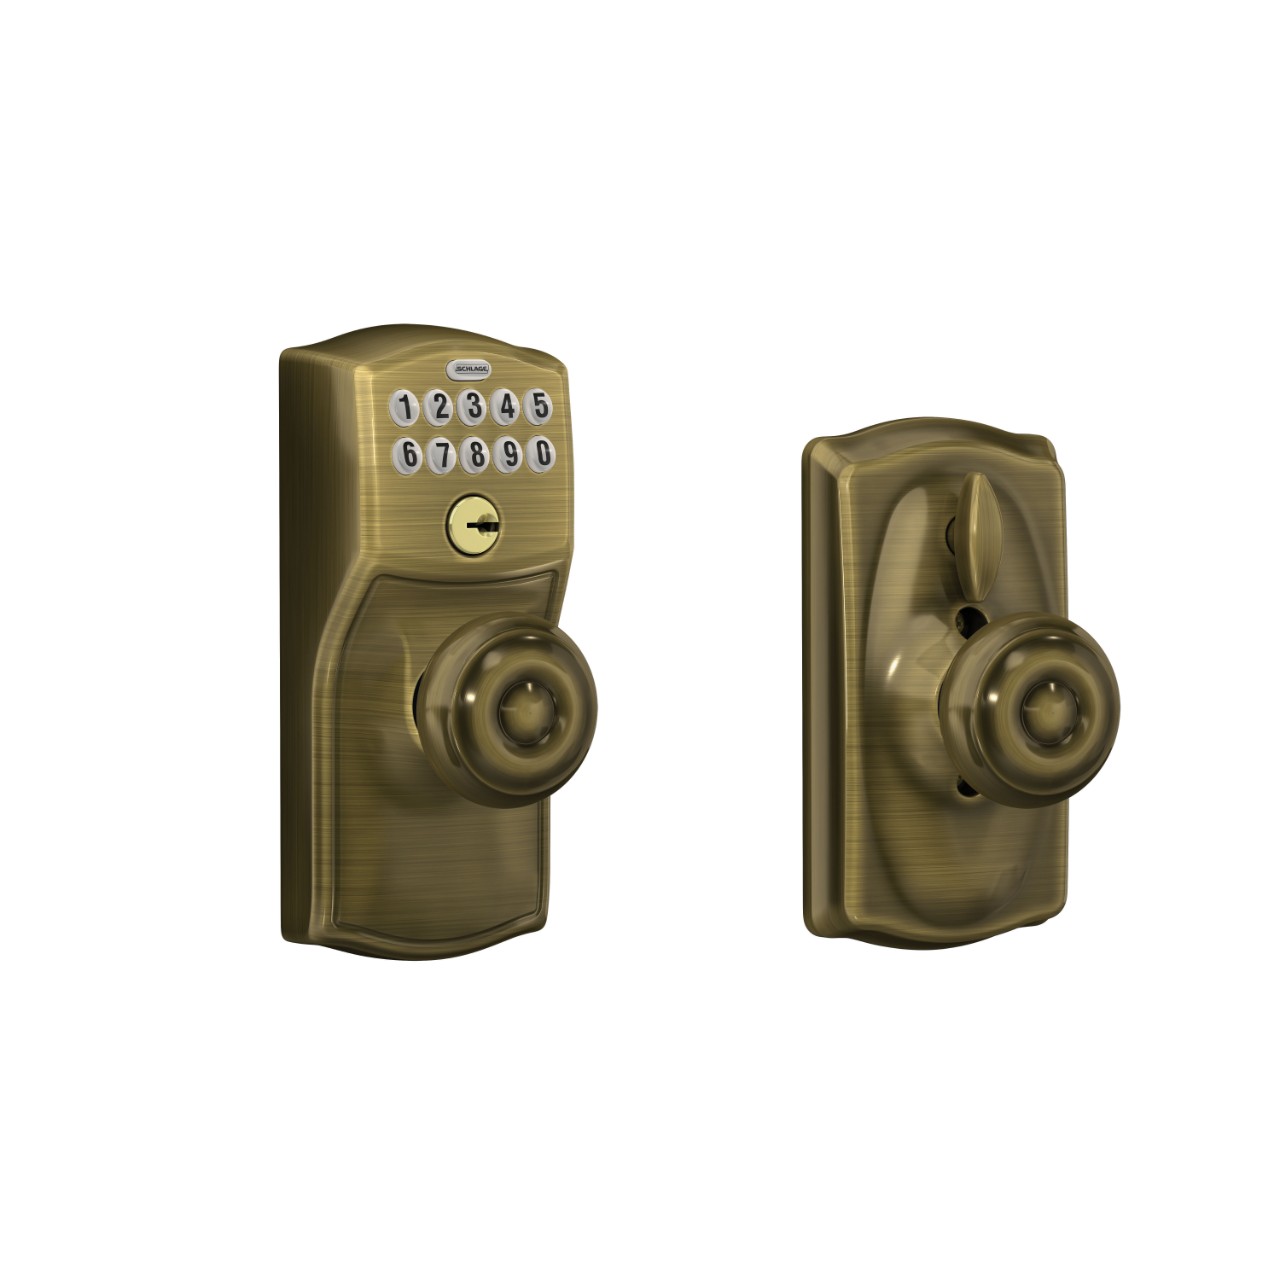 Keypad Knob and Georgian Knob with Flex Lock